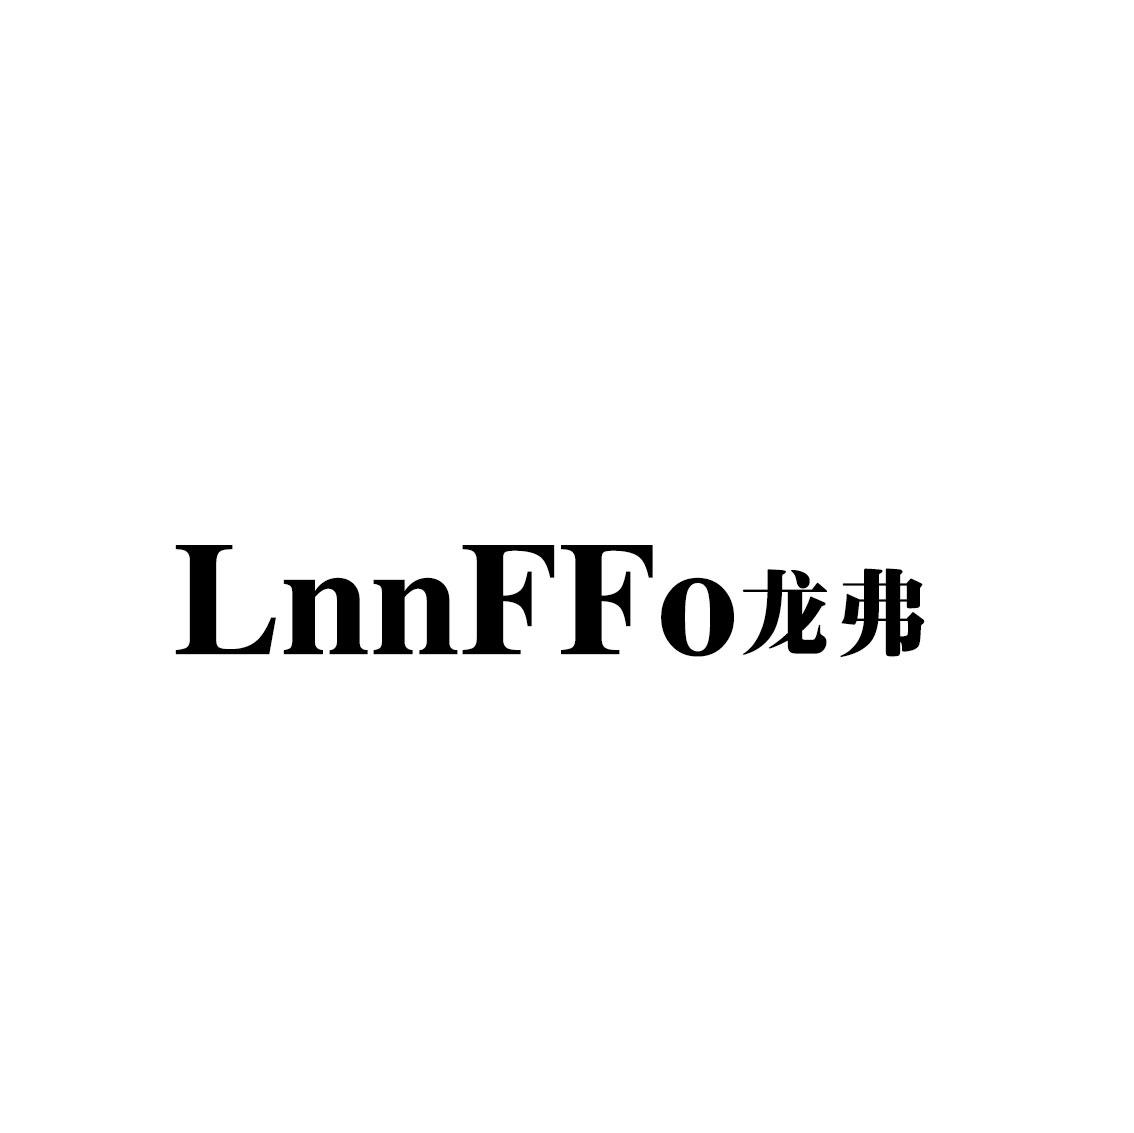 11类-电器灯具LNNFFO龙弗商标转让